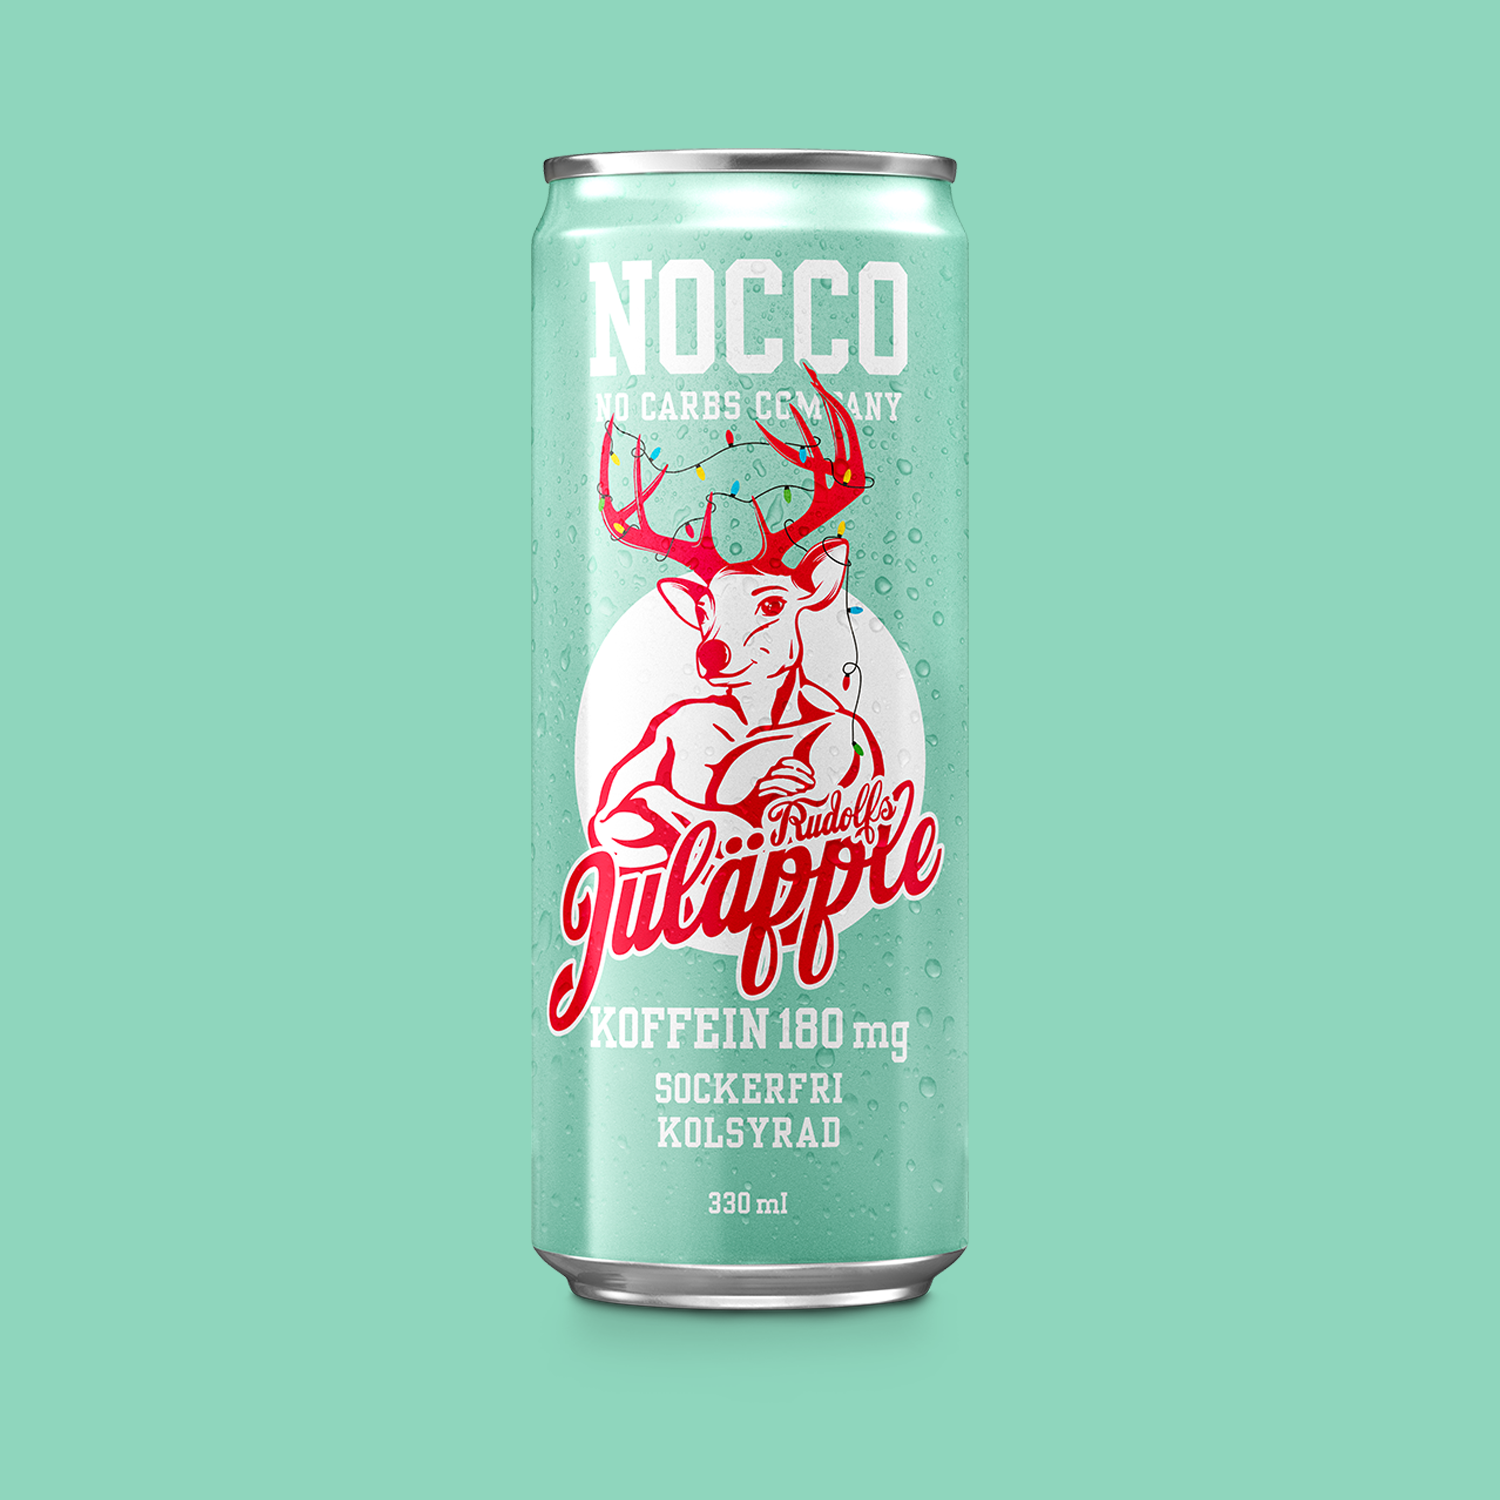 Nocco juläpple ny smak julen 2018